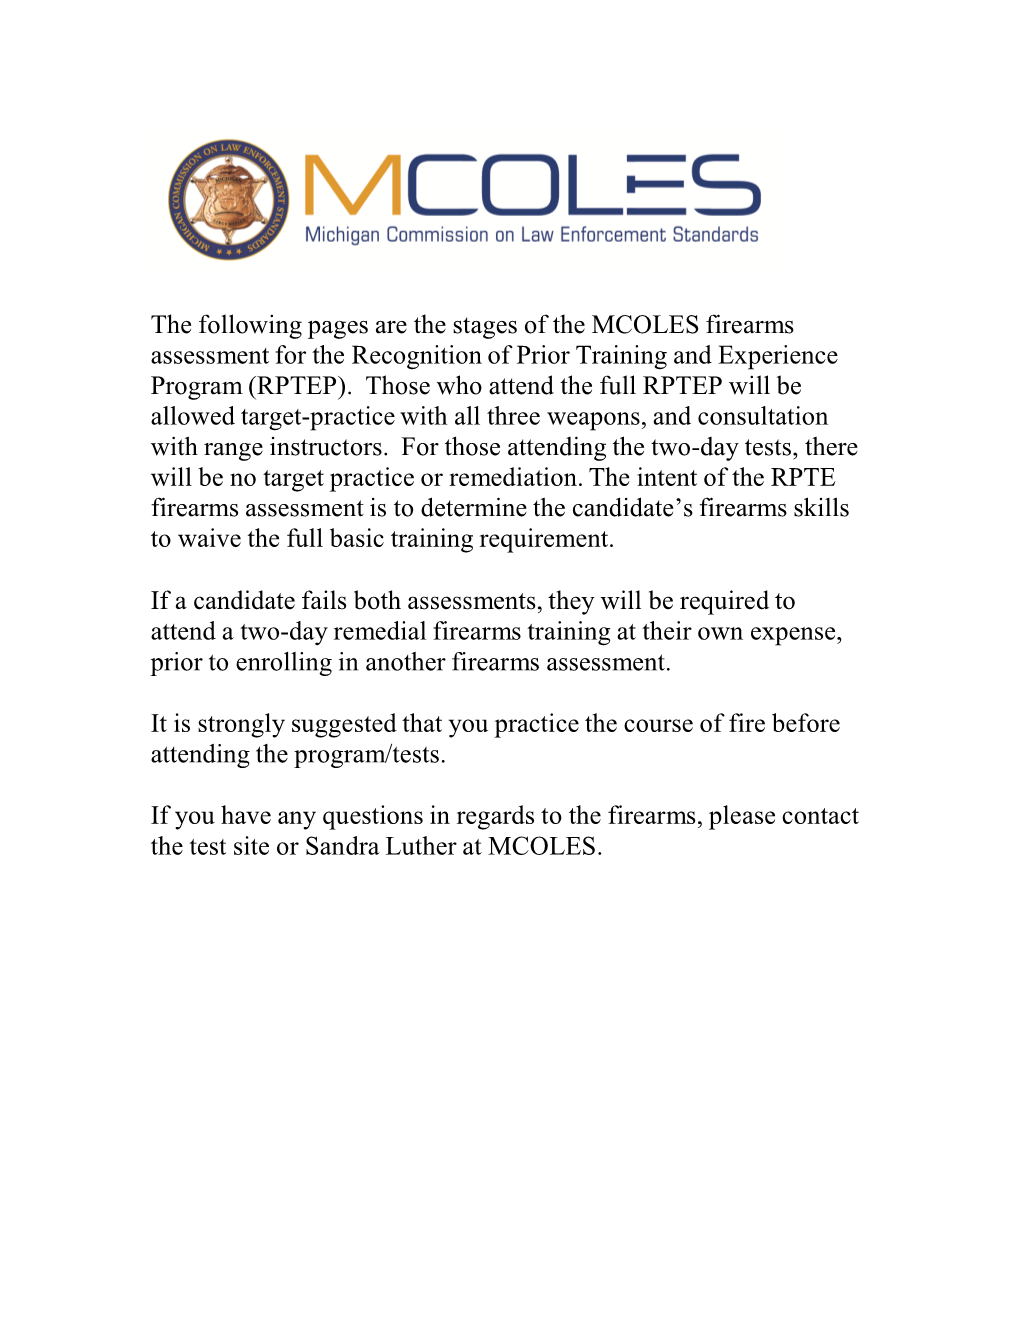 MCOLES Mandatory Basic Training Firearms Assessment